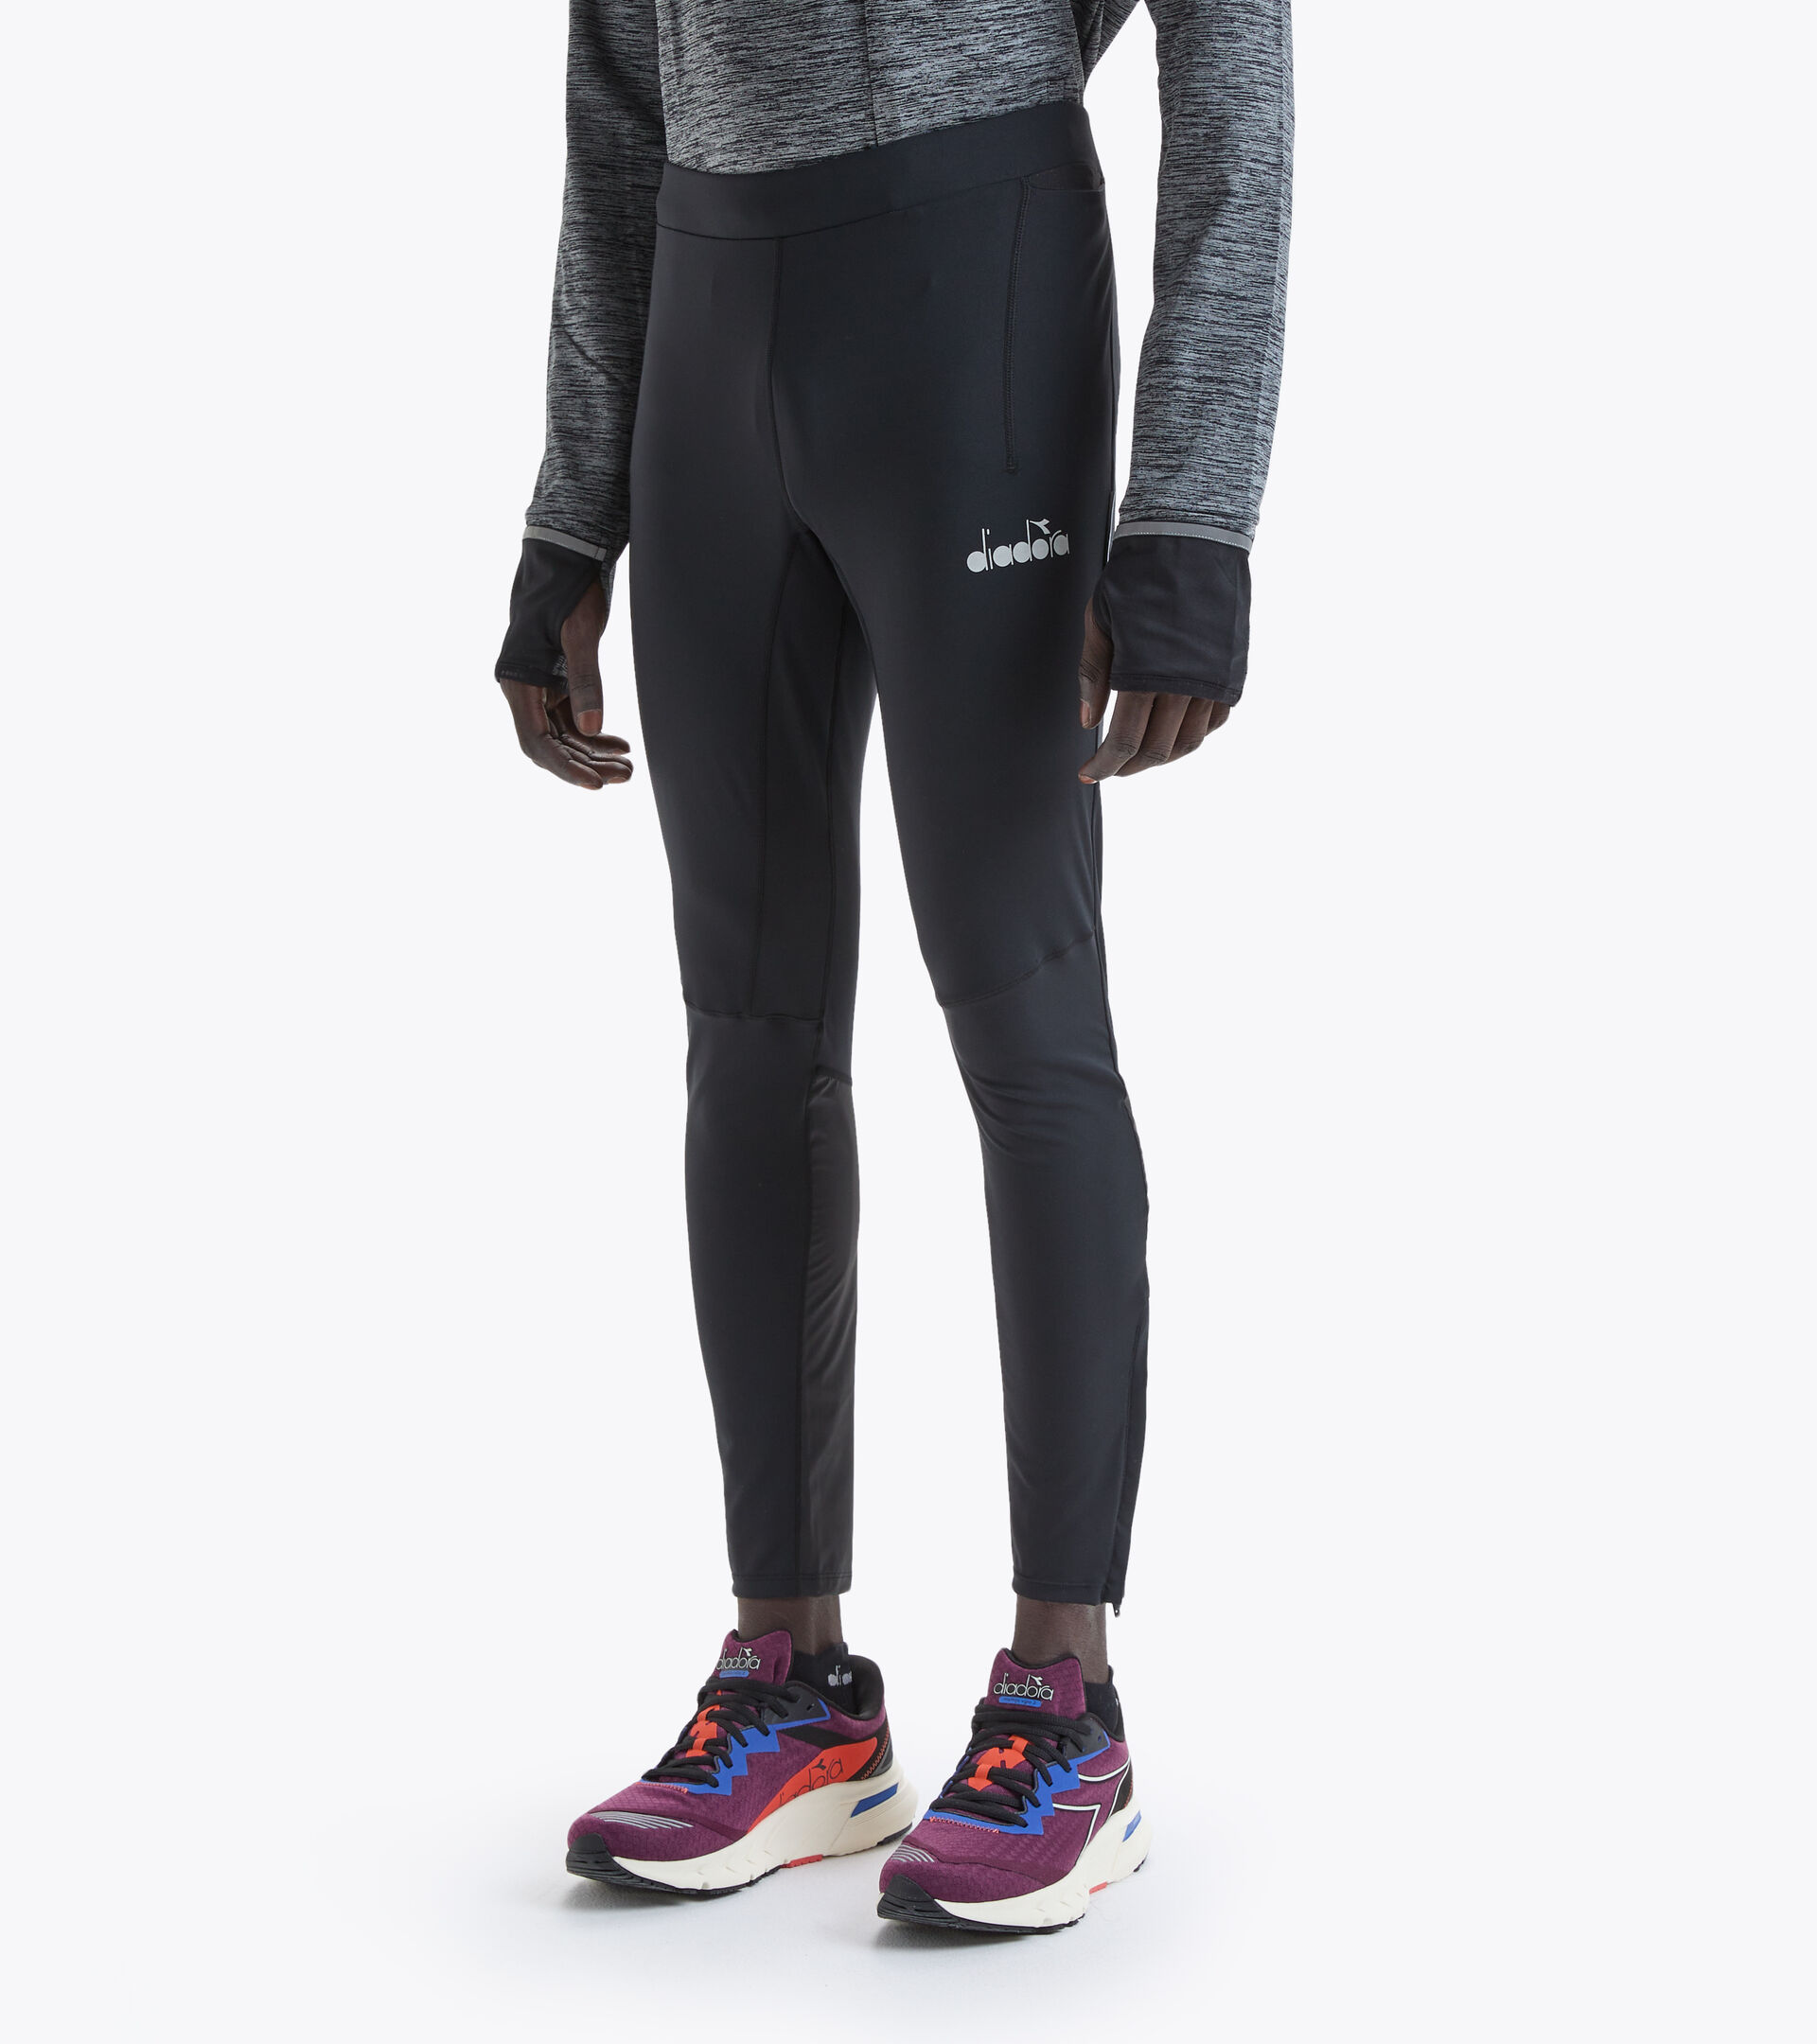 Nike Men's Power Tech Dri-Fit Reflective Running Tights Black 2XL MSRP $120